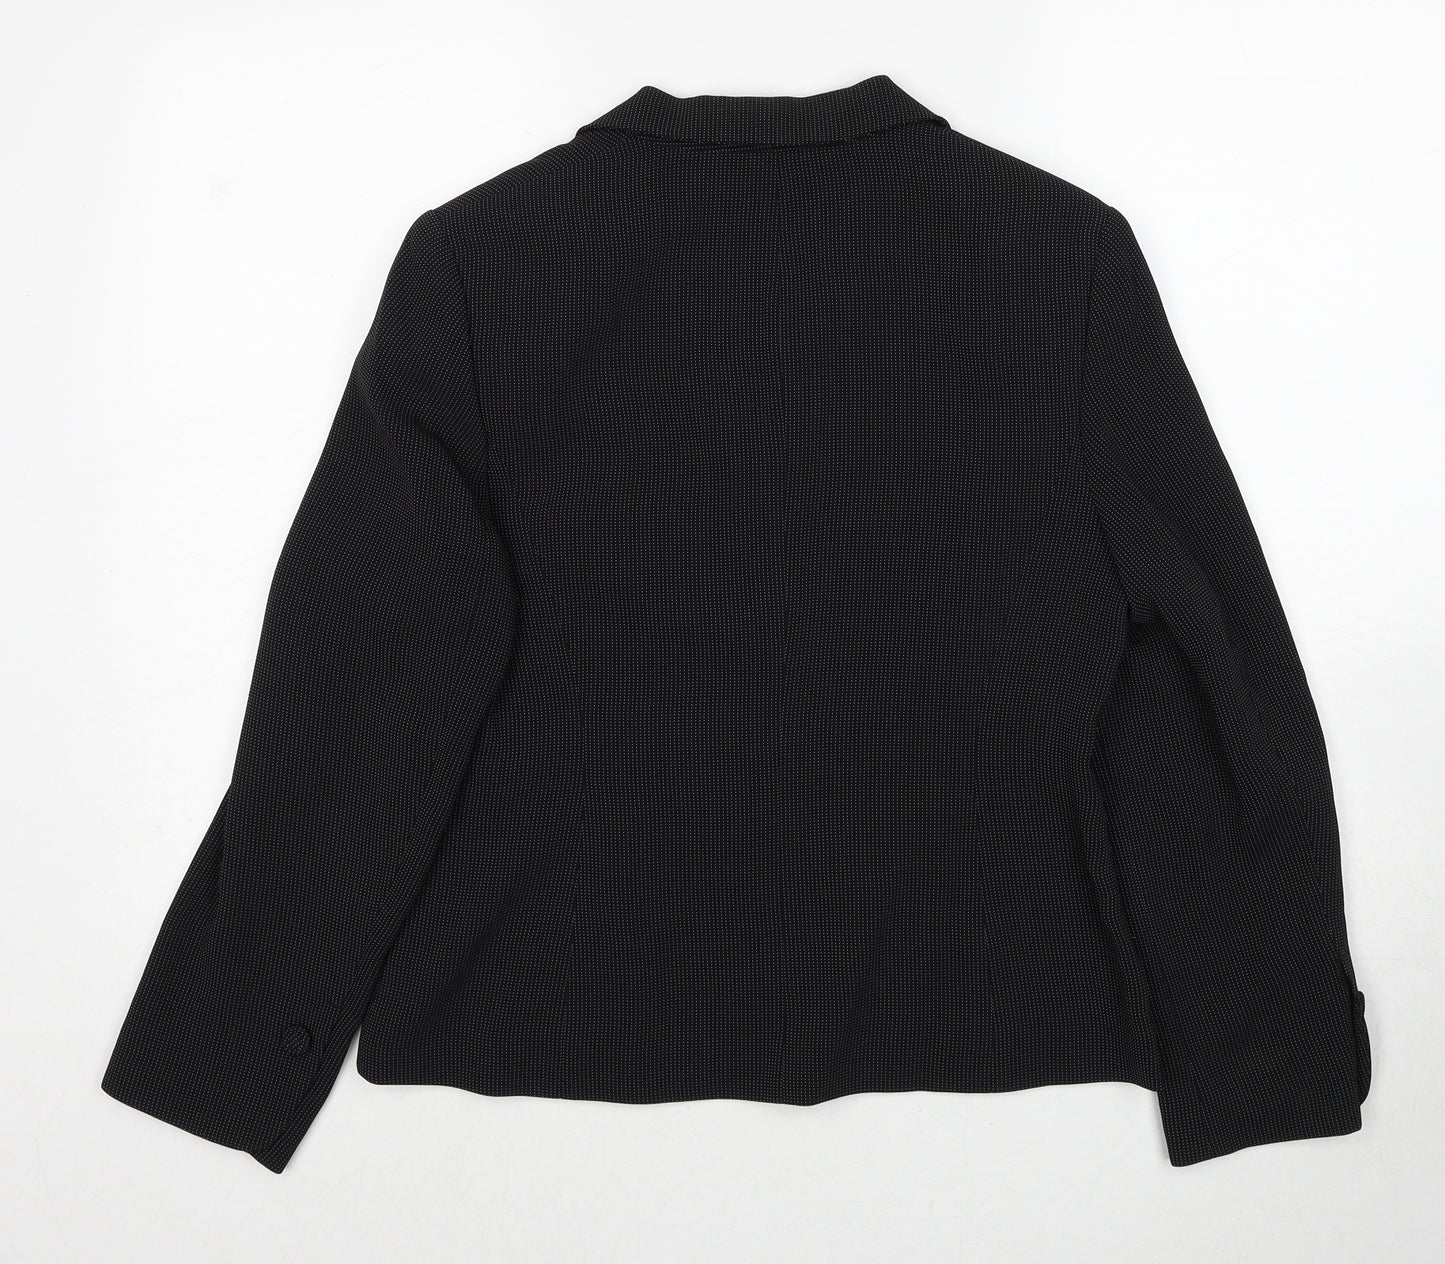 NEXT Womens Black Polka Dot Polyester Jacket Suit Jacket Size 12 Button